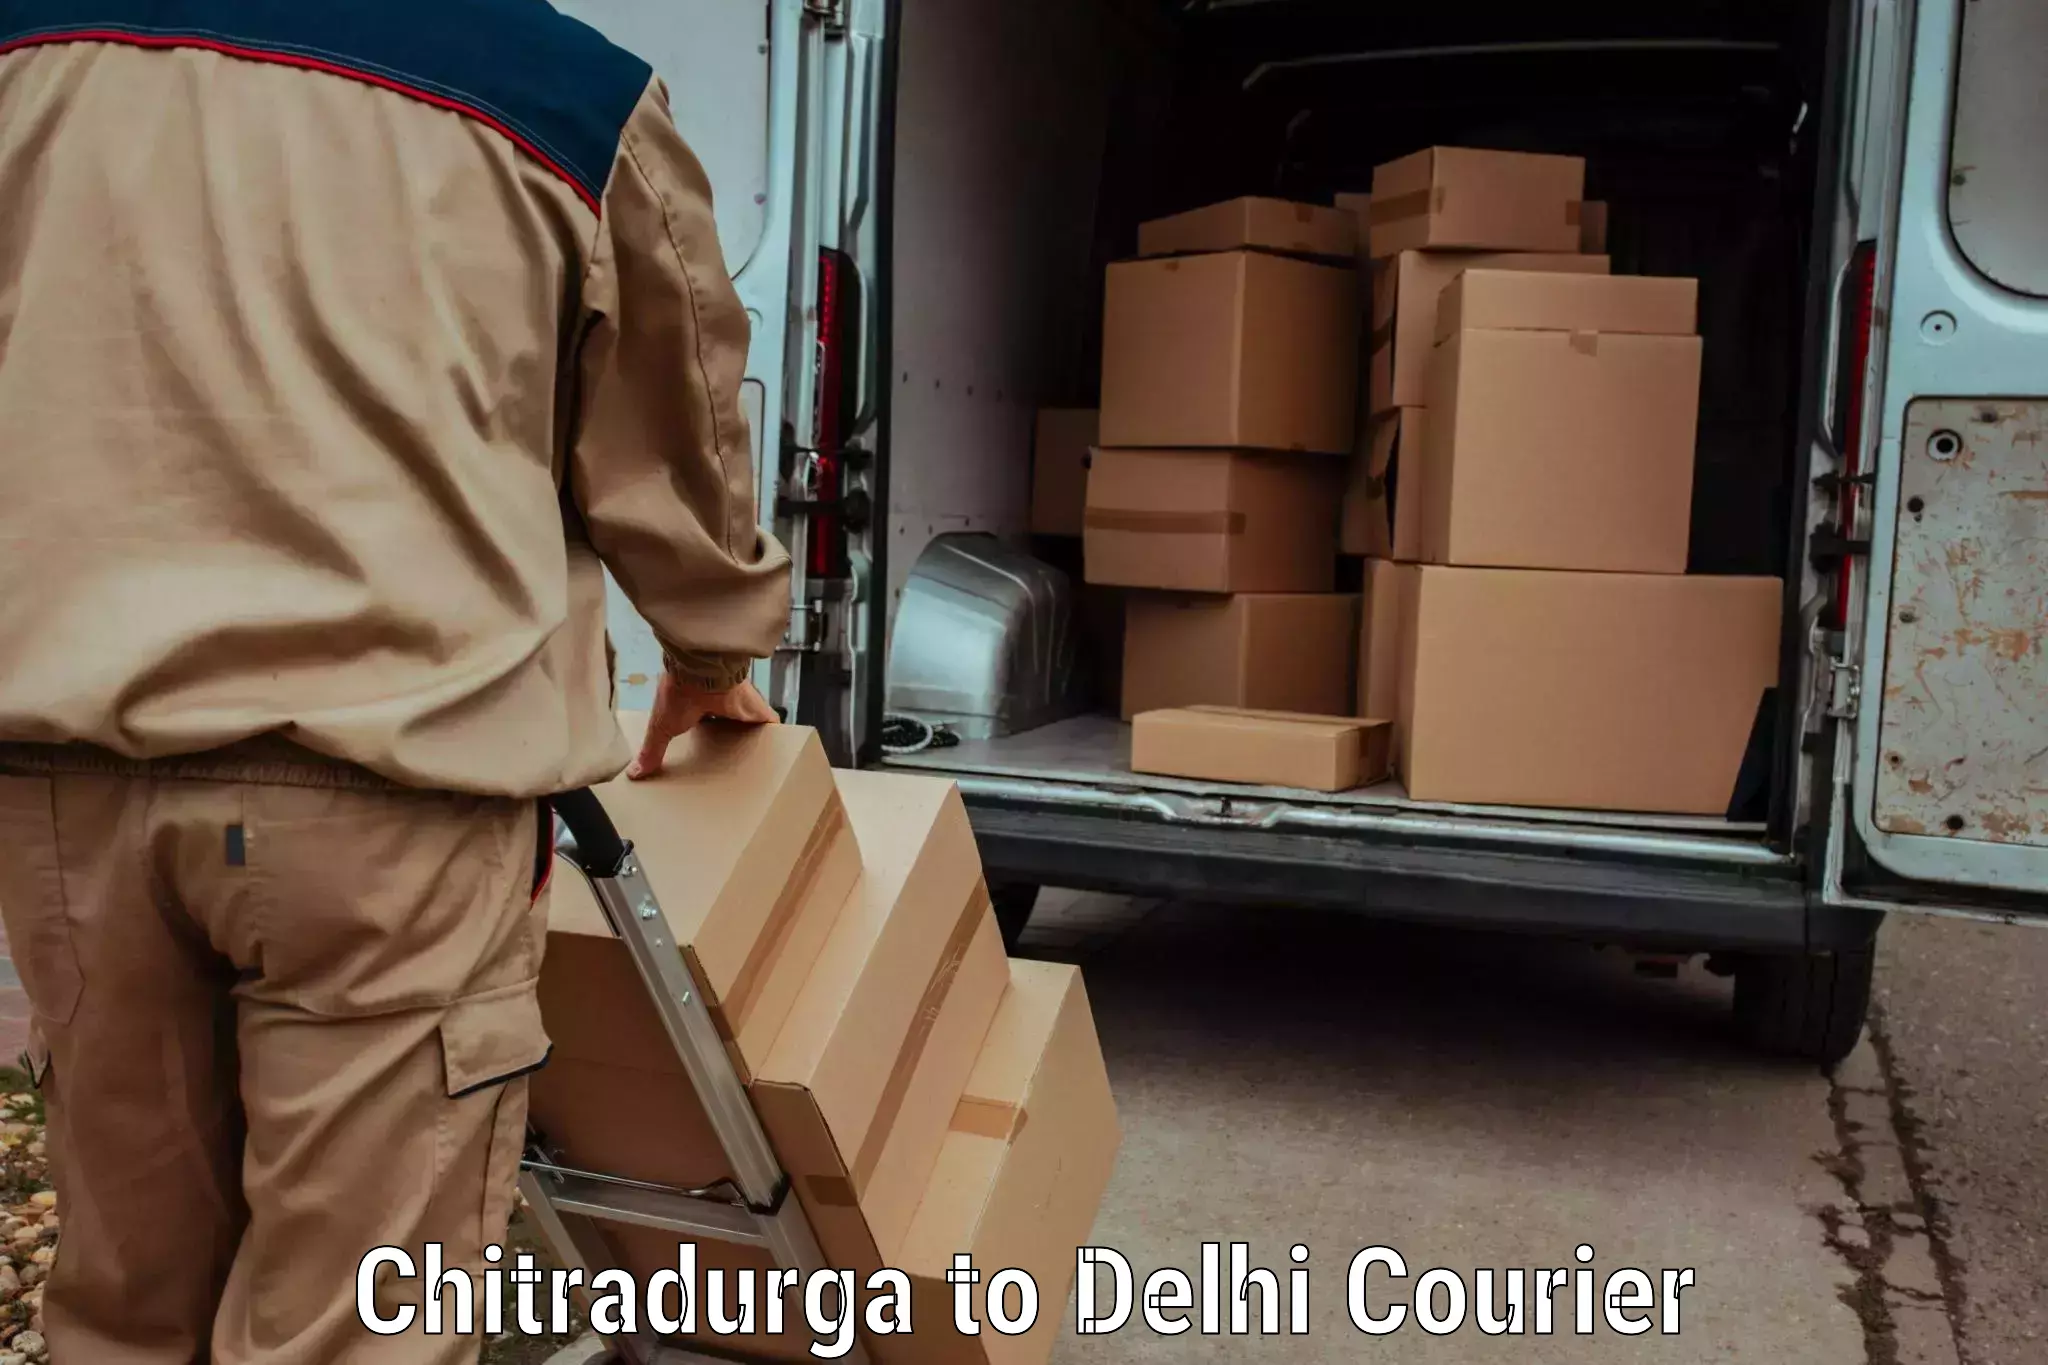 24/7 courier service Chitradurga to NCR